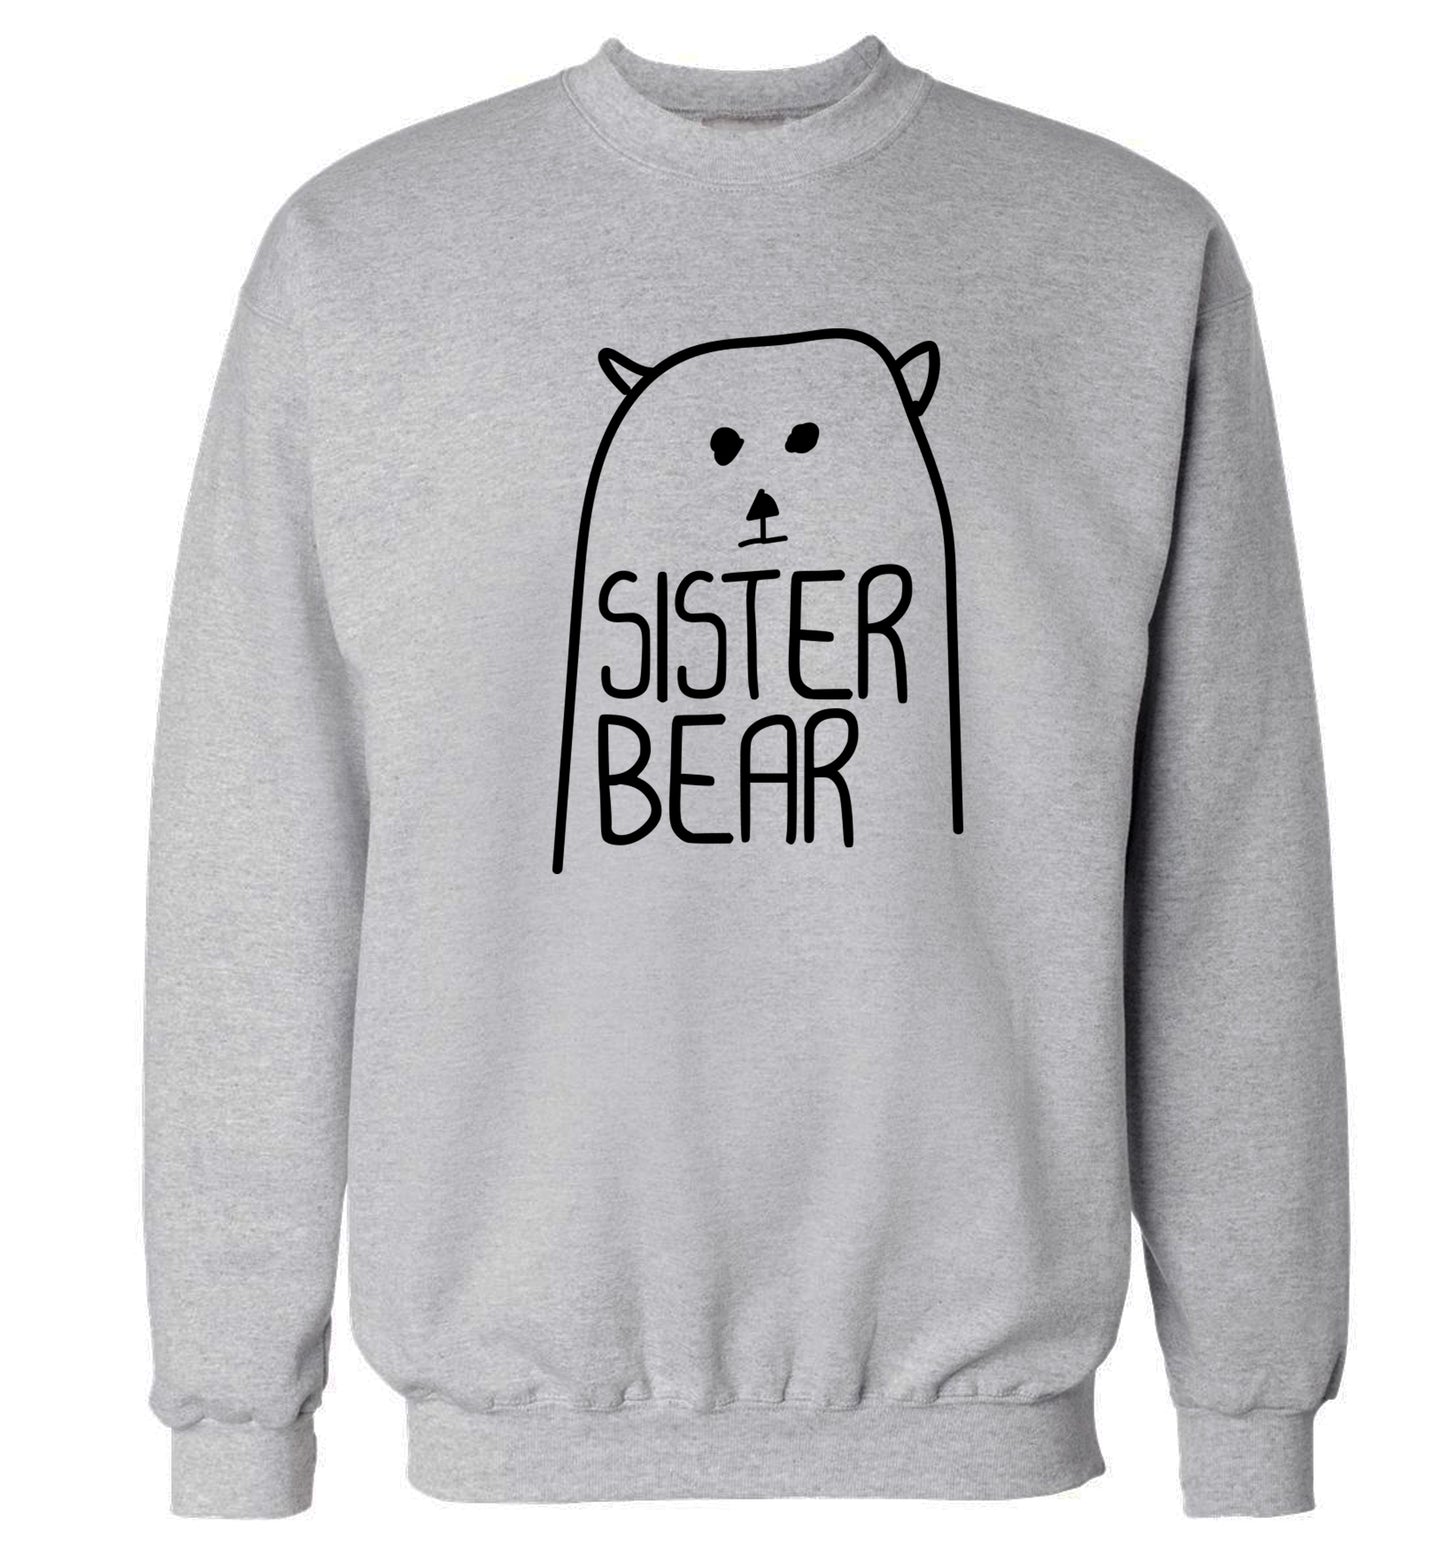 Sister bear Adult's unisex grey Sweater 2XL